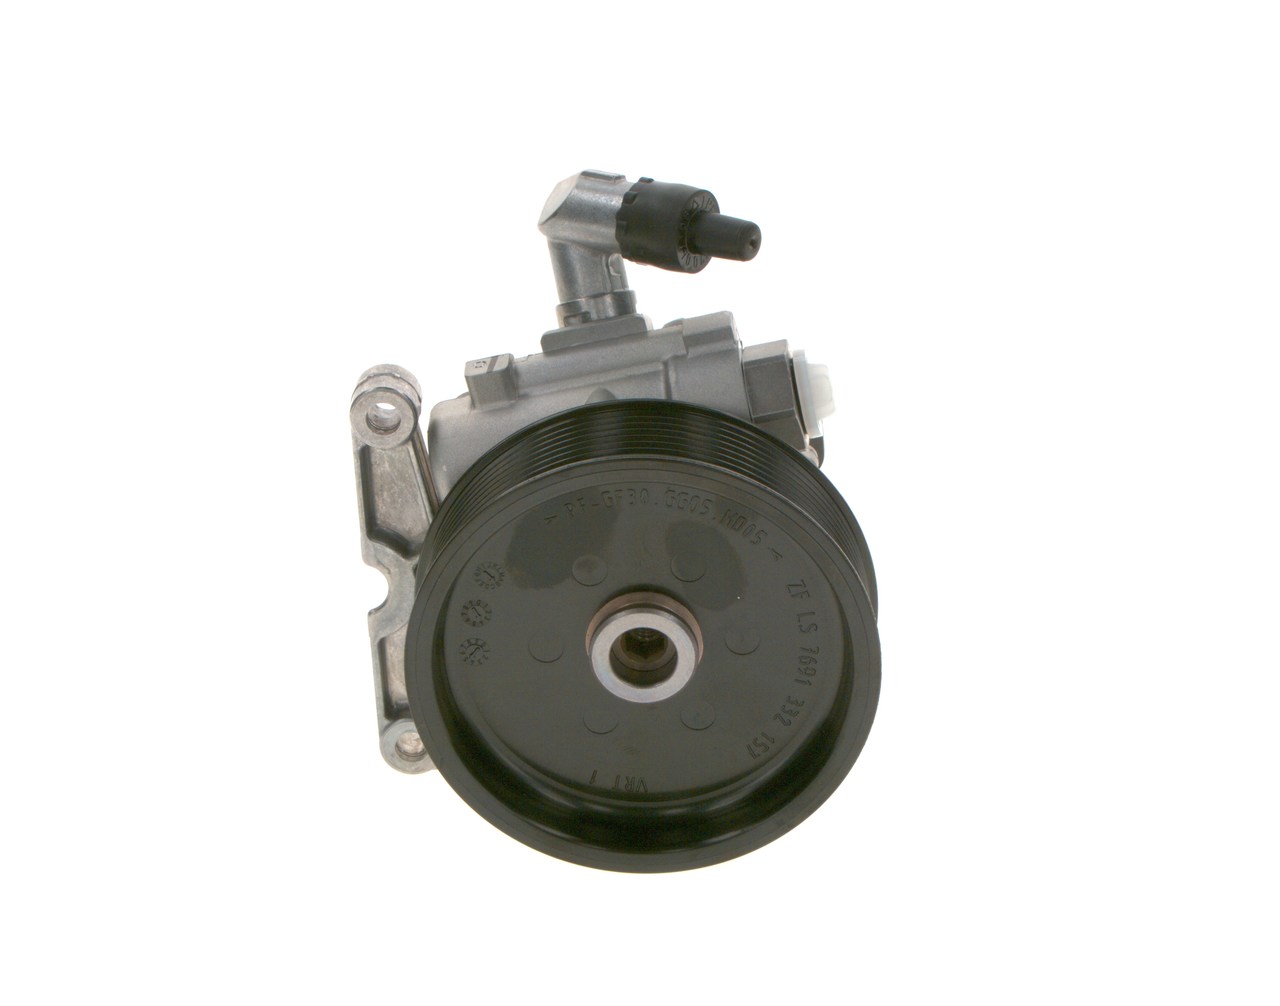 BOSCH K S01 000 674 Power steering pump Hydraulic, Pressure-limiting Valve, Vane Pump, Clockwise rotation